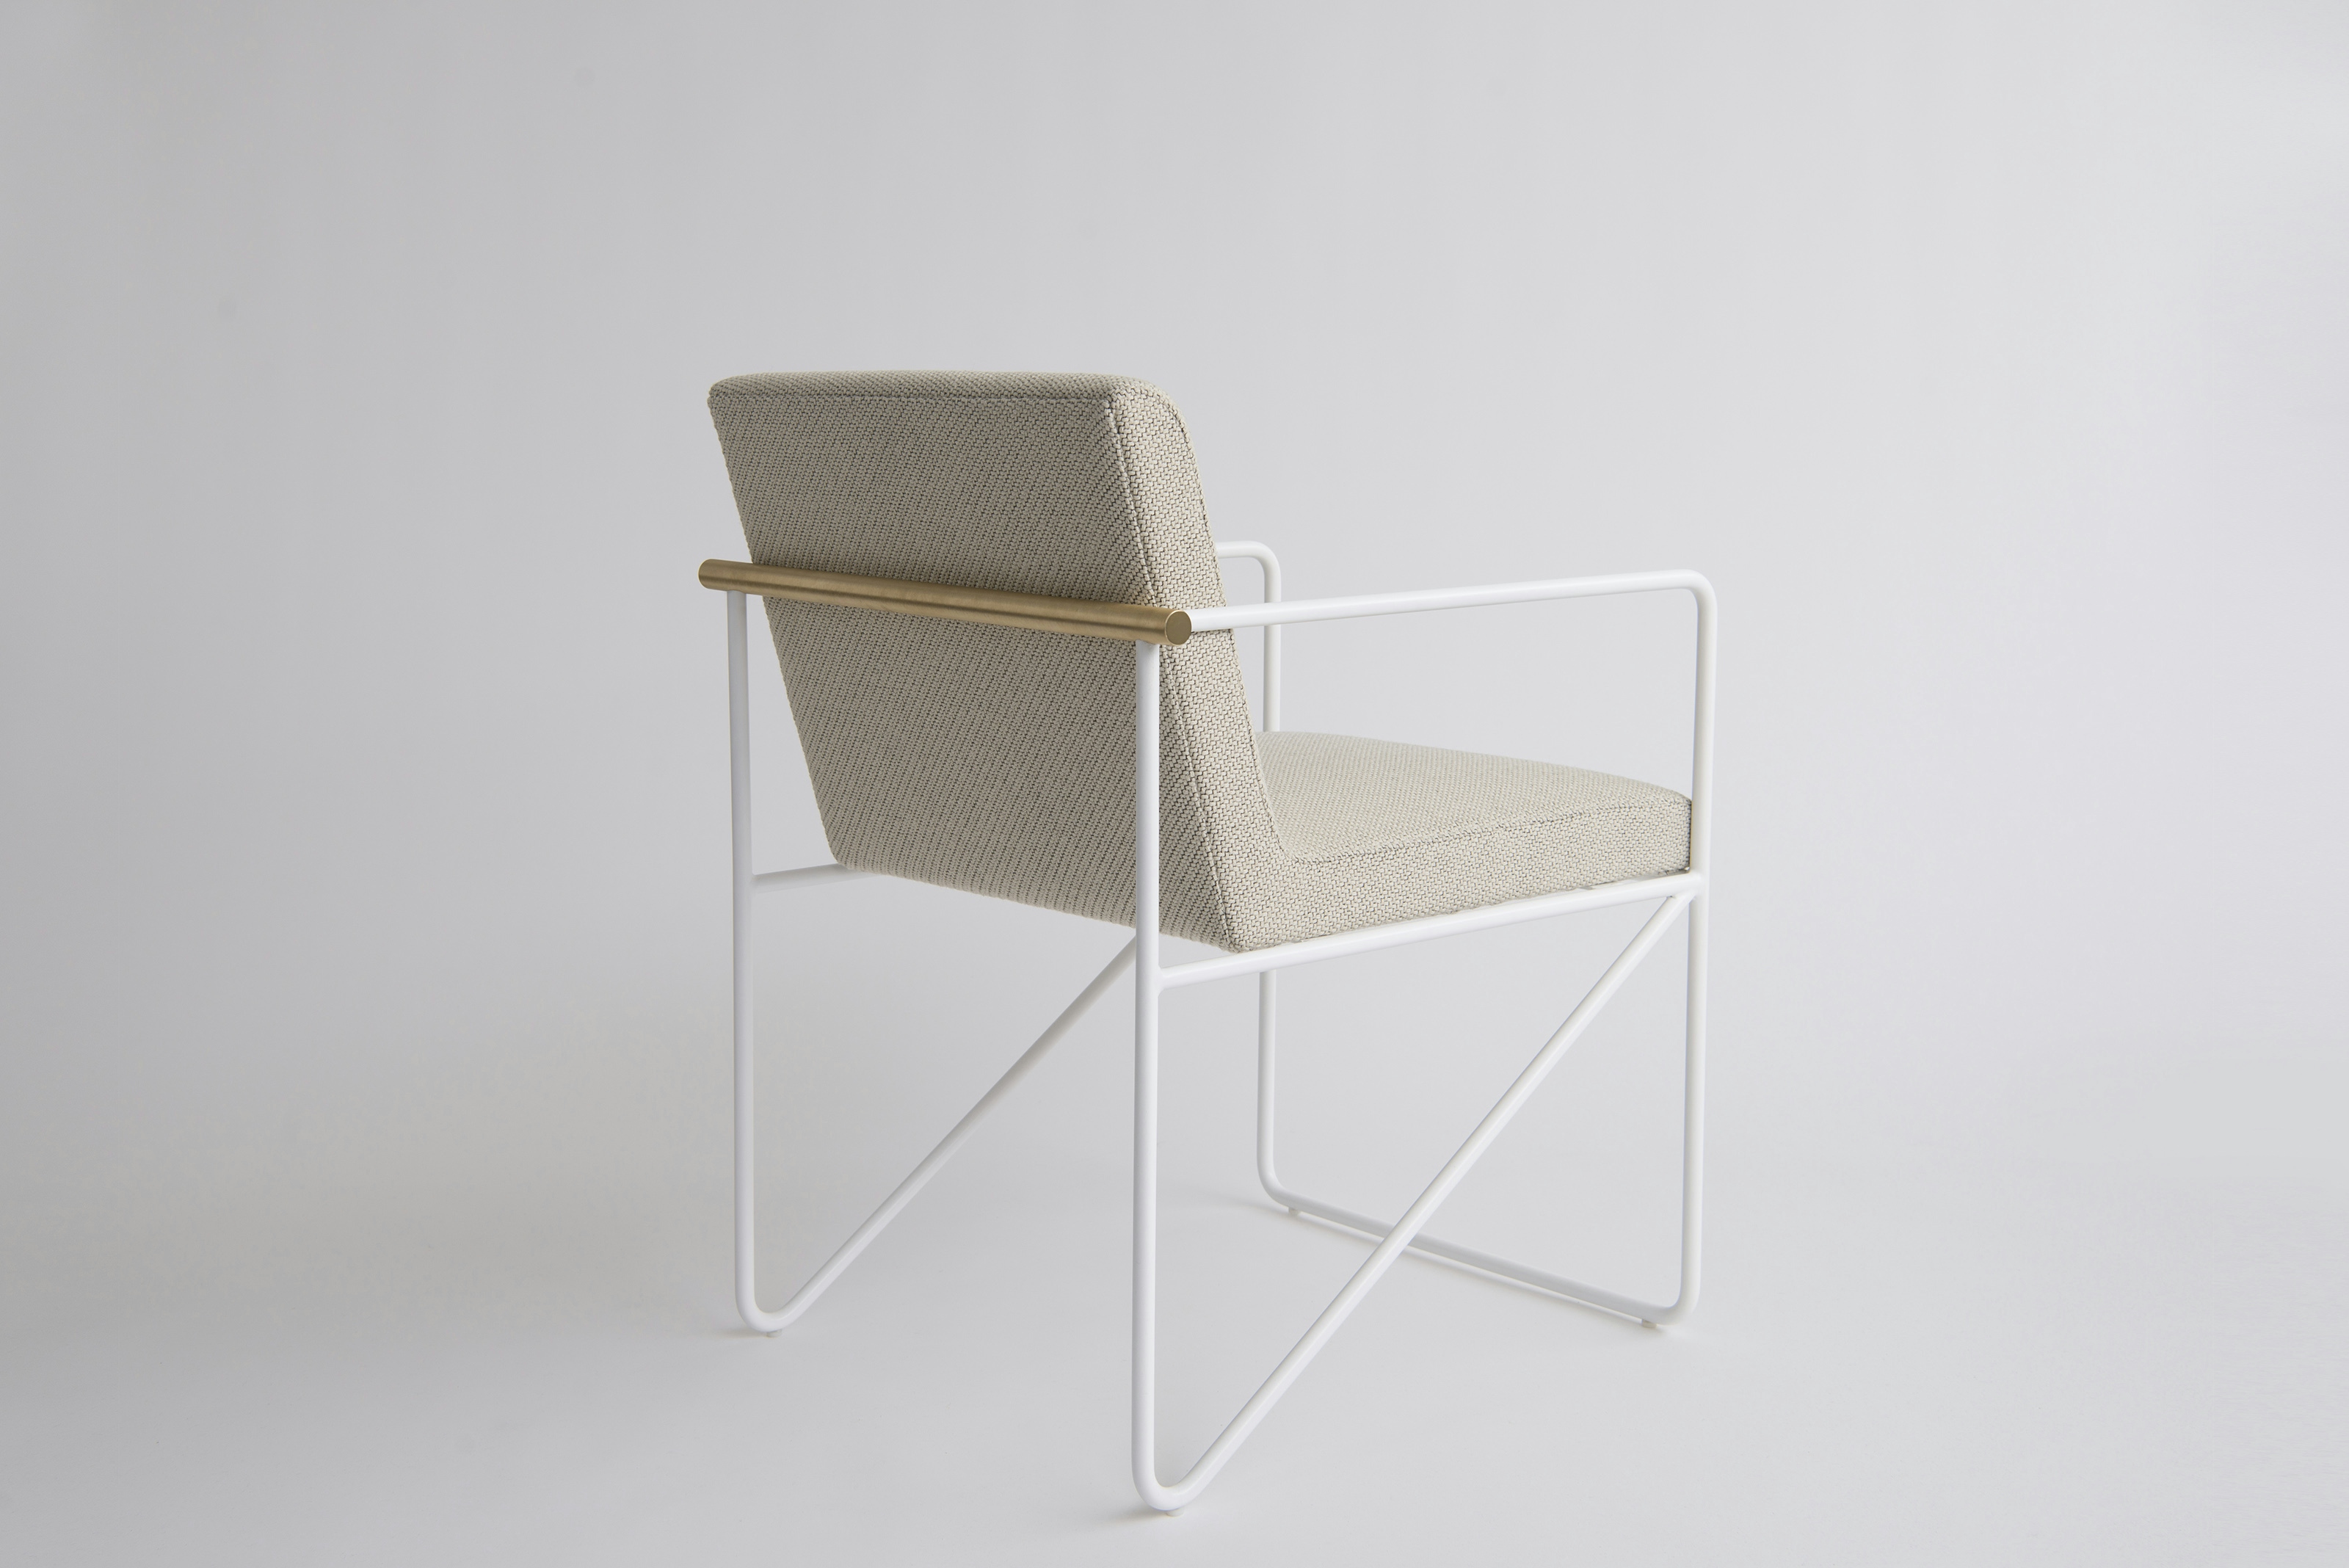 Phase Design Reza Feiz Kickstand Side Chair 4 Web